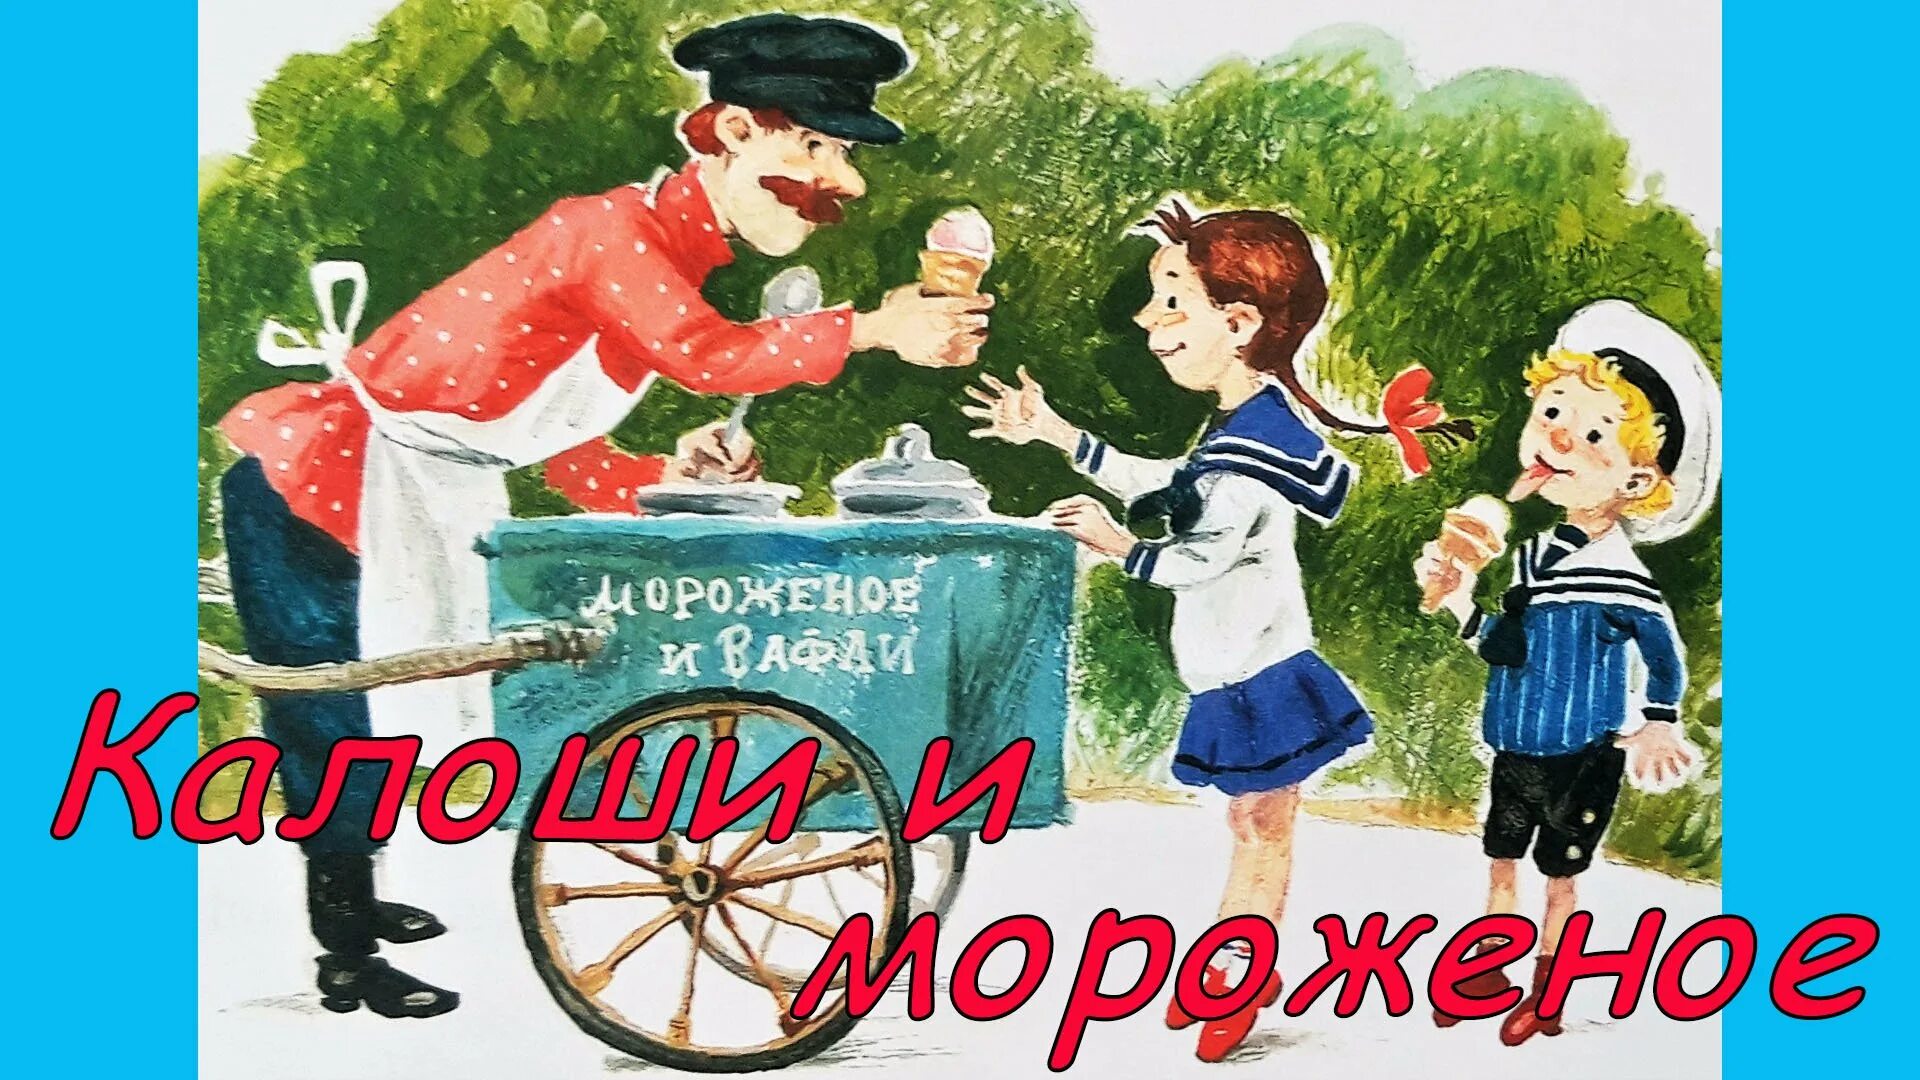 Зощенко галоша и мороженое. М.М. Зощенко "галоши и мороженное". Галоши и мороженое Зощенко картинки.